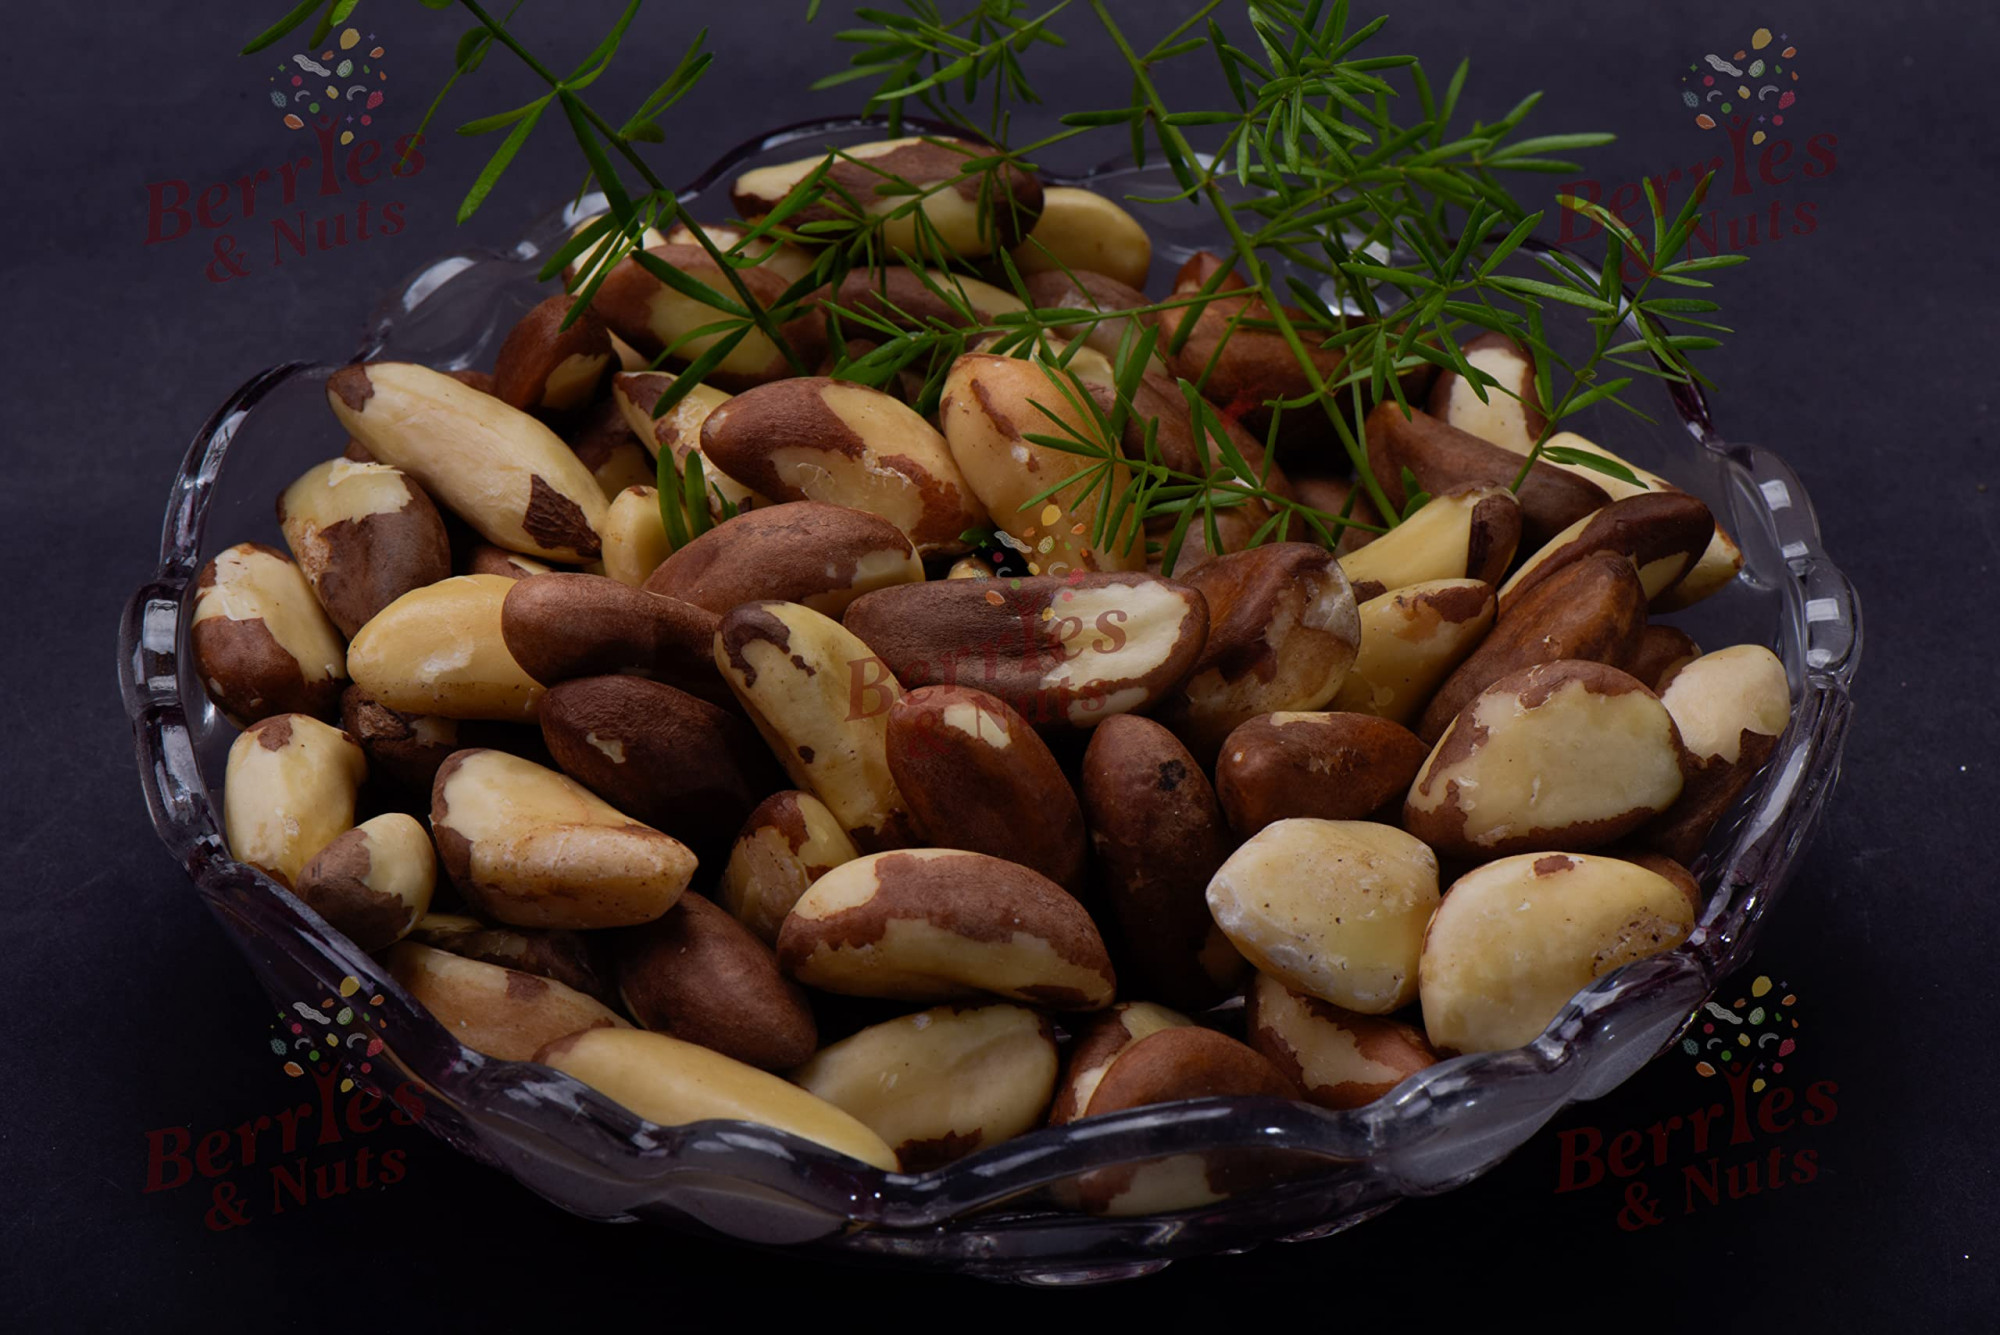 Berries And Nuts Premium Jumbo Brazil Nuts 250 Grams | Rich Source of Selenium, Antioxidant Rich Super Food